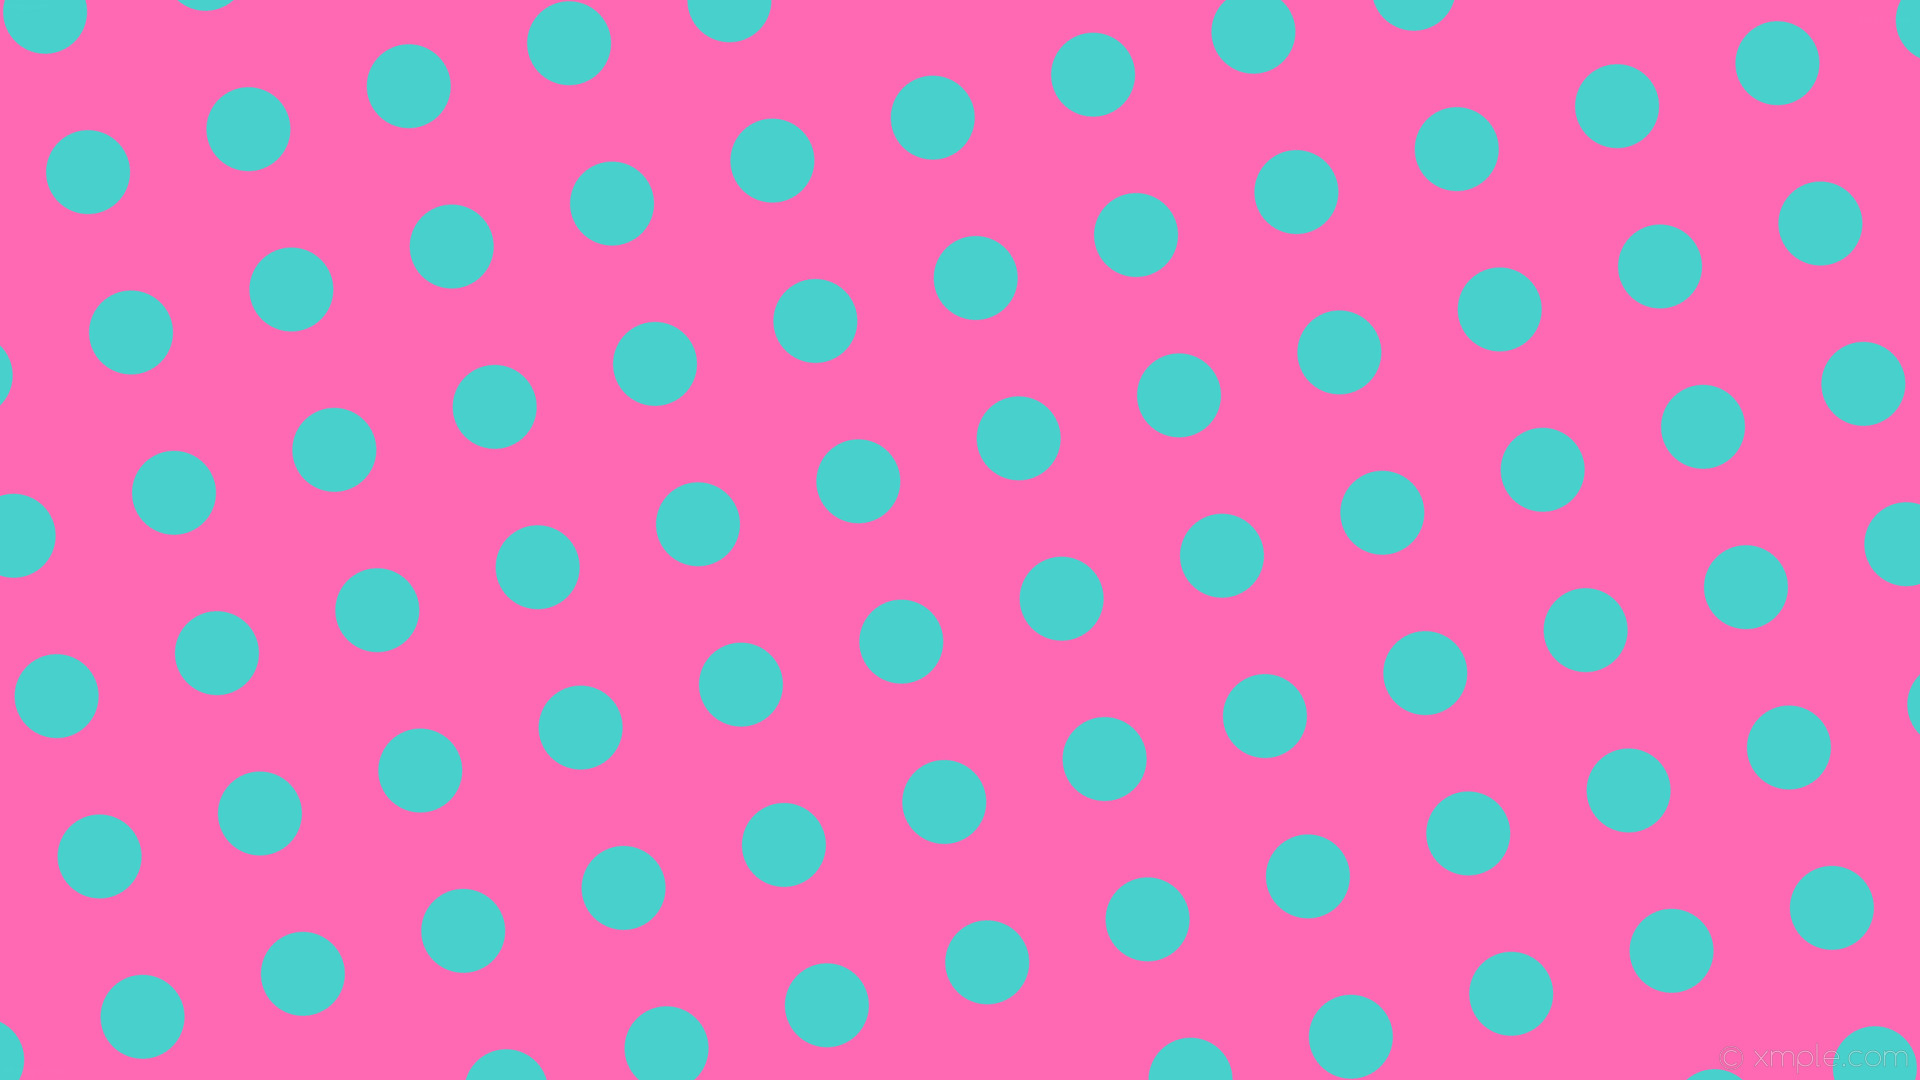 1920x1080 wallpaper polka dots spots blue pink hot pink medium turquoise #ff69b4  #48d1cc 15Â°